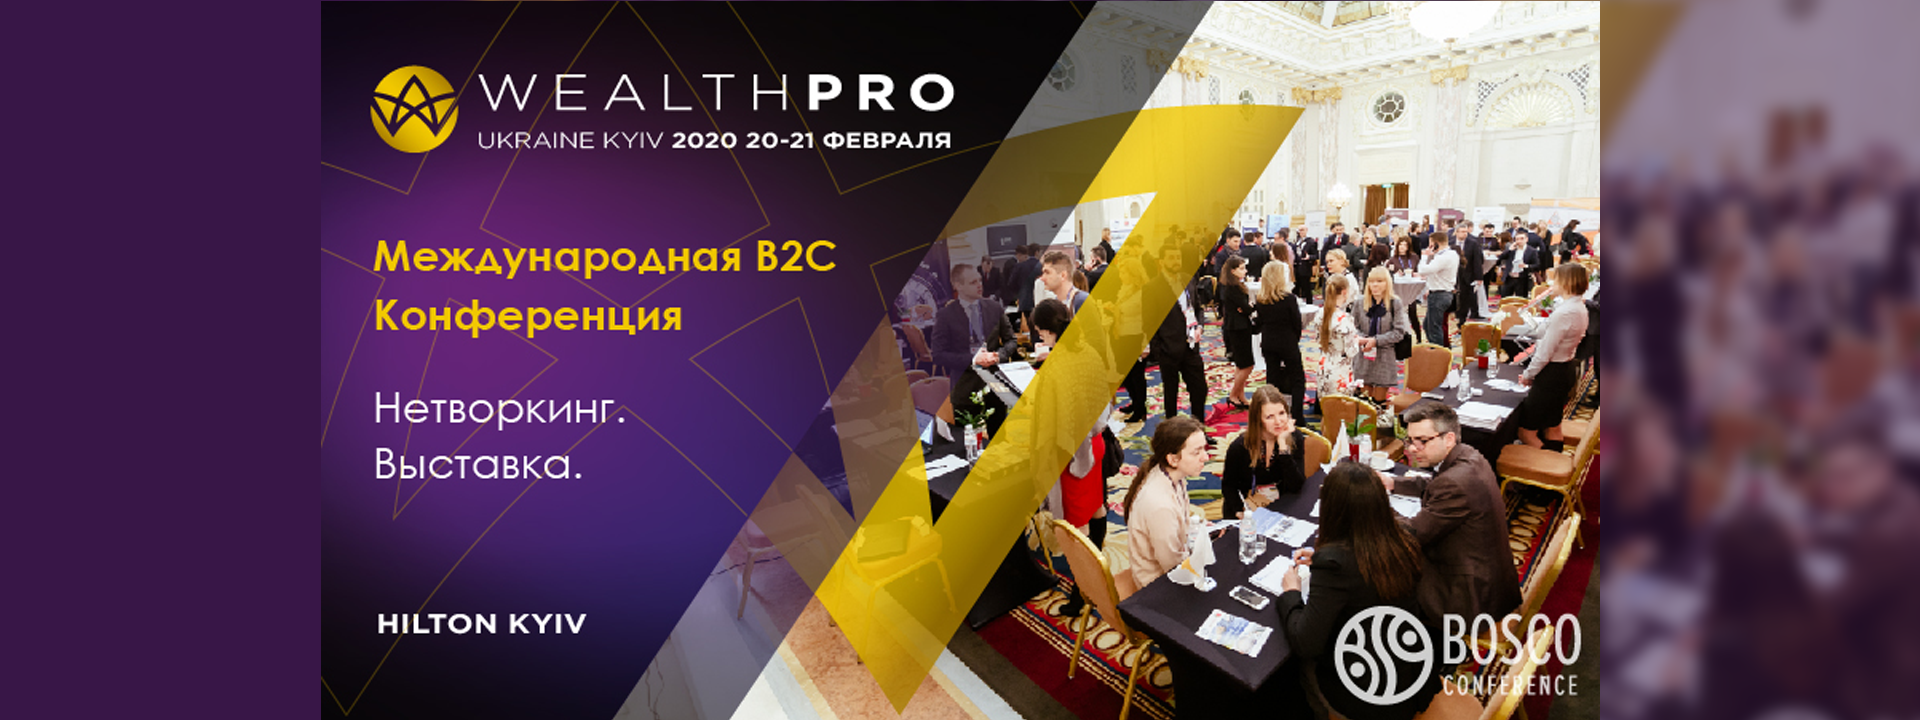 WealthPro Ukraine Kyiv 2020